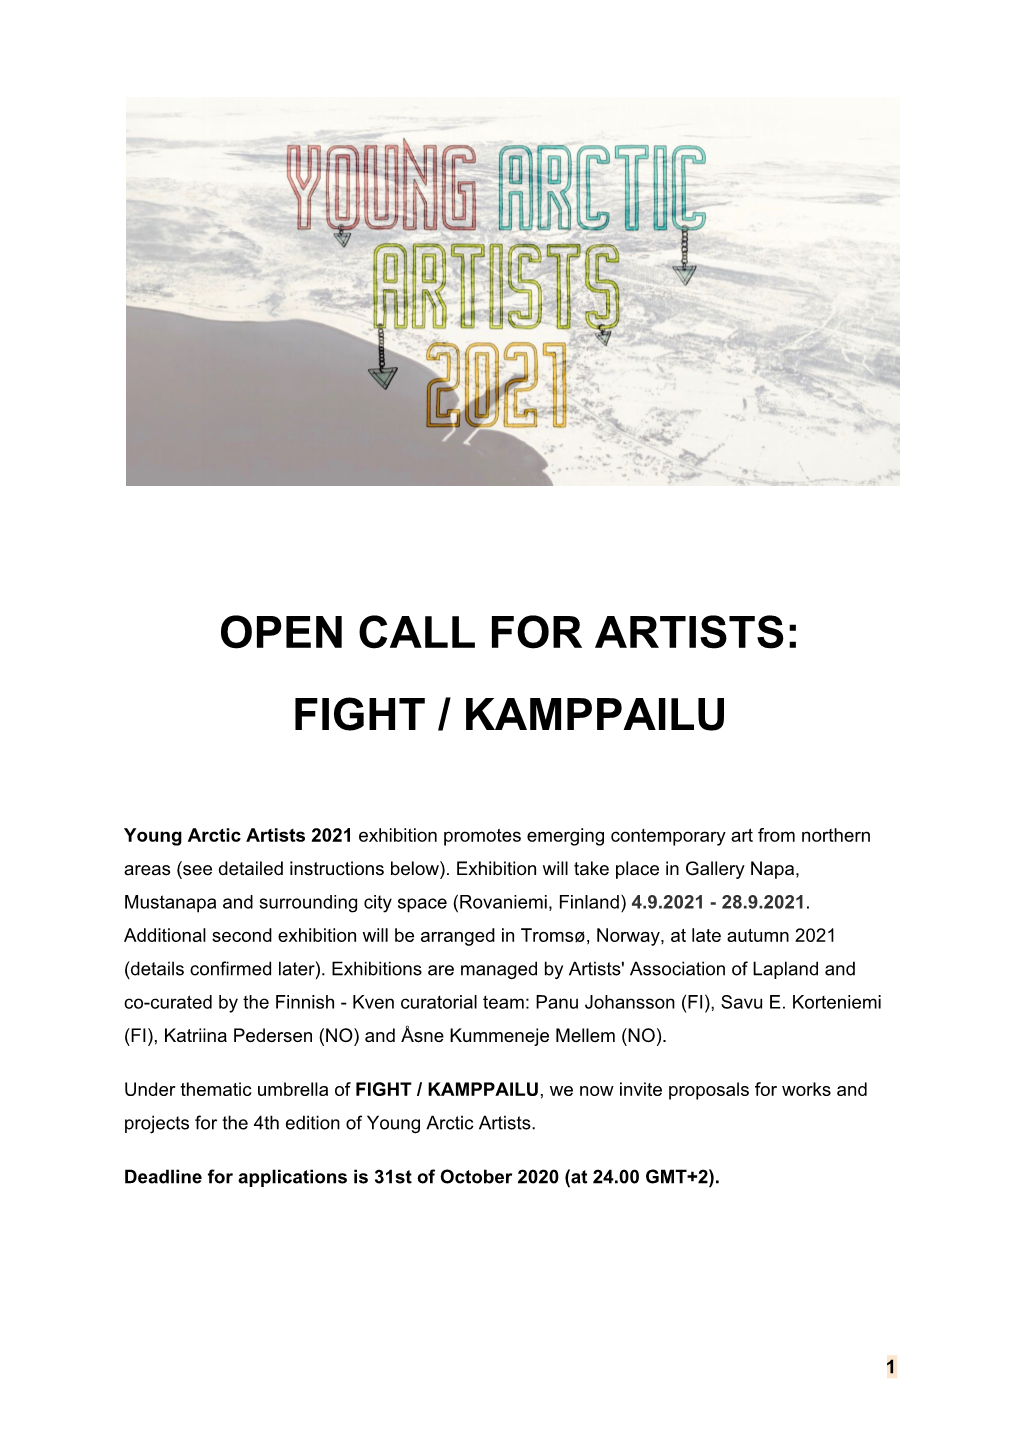 Open Call for Artists: Fight / Kamppailu